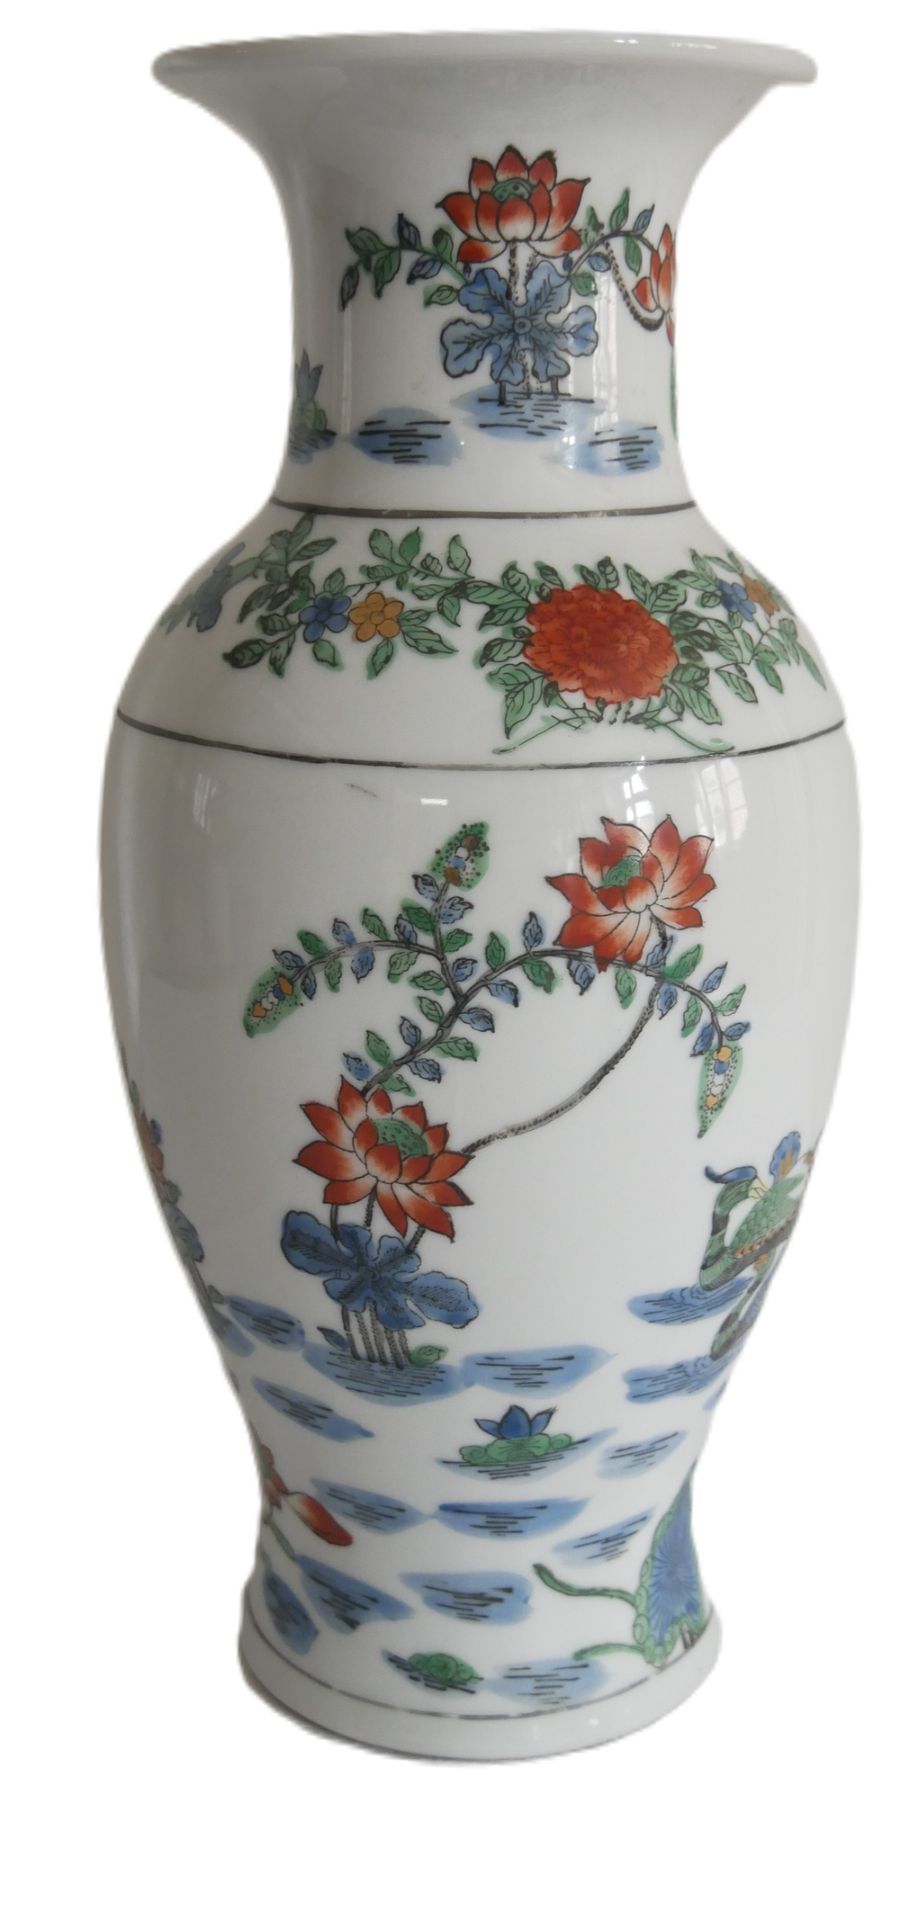 Porzellan Vase Xiang Gang Jia Gong - Hong Kong. Handbemalt floral mit Enten, wohl 60er/70er Jahre.